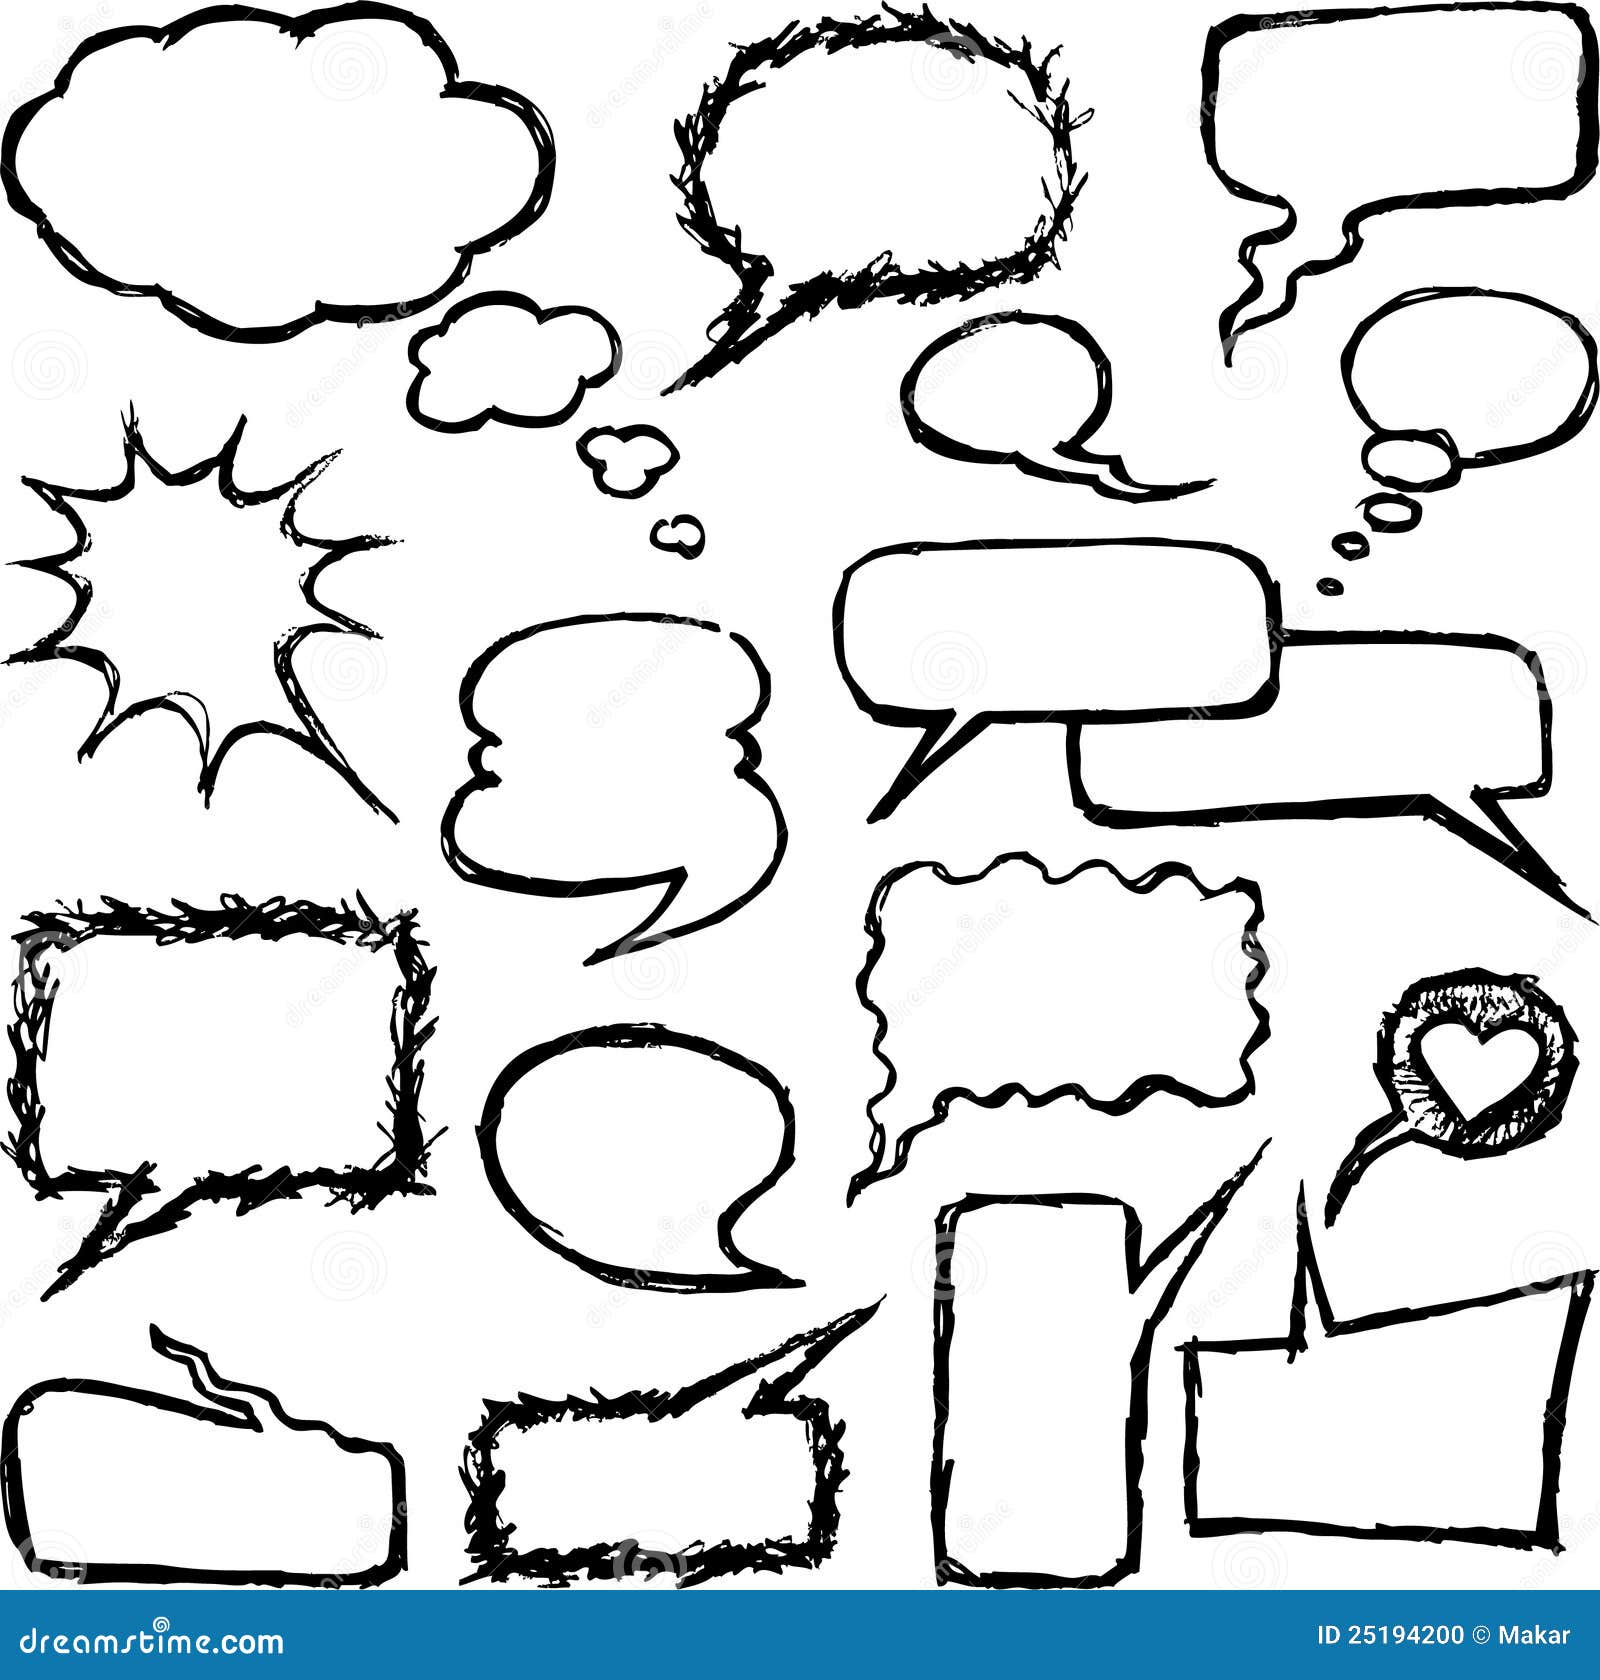 Speech doodles stock vector. Illustration of bubble, hand - 25194200